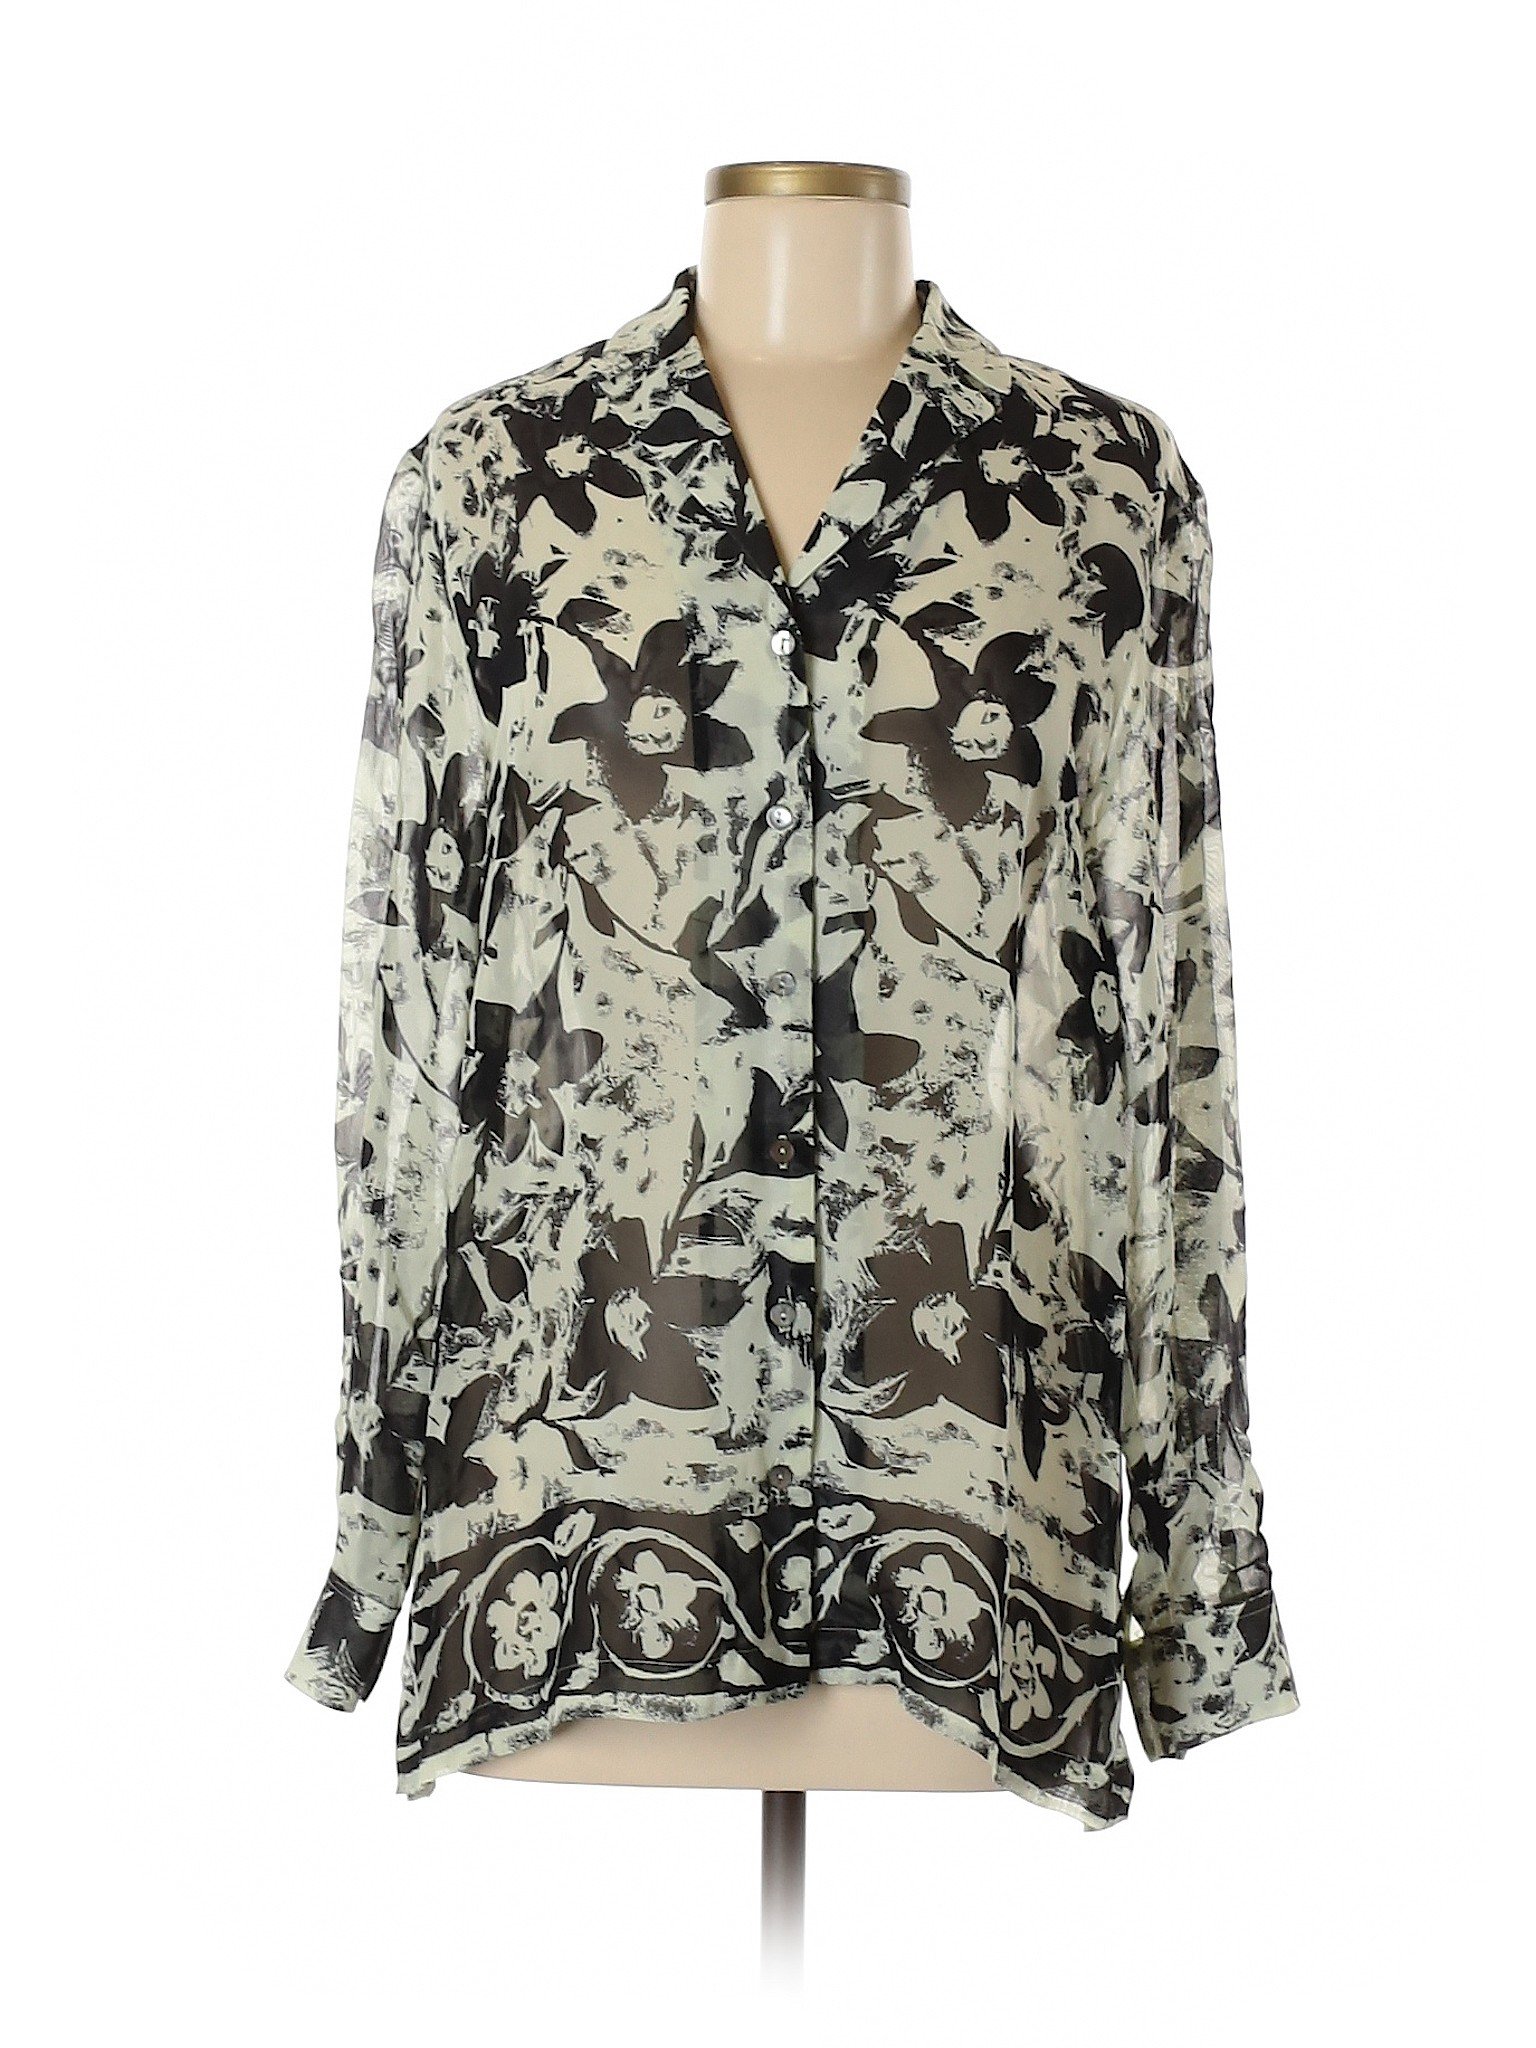 Sigrid Olsen 100% Rayon Tropical Black Long Sleeve Blouse Size M - 92% ...